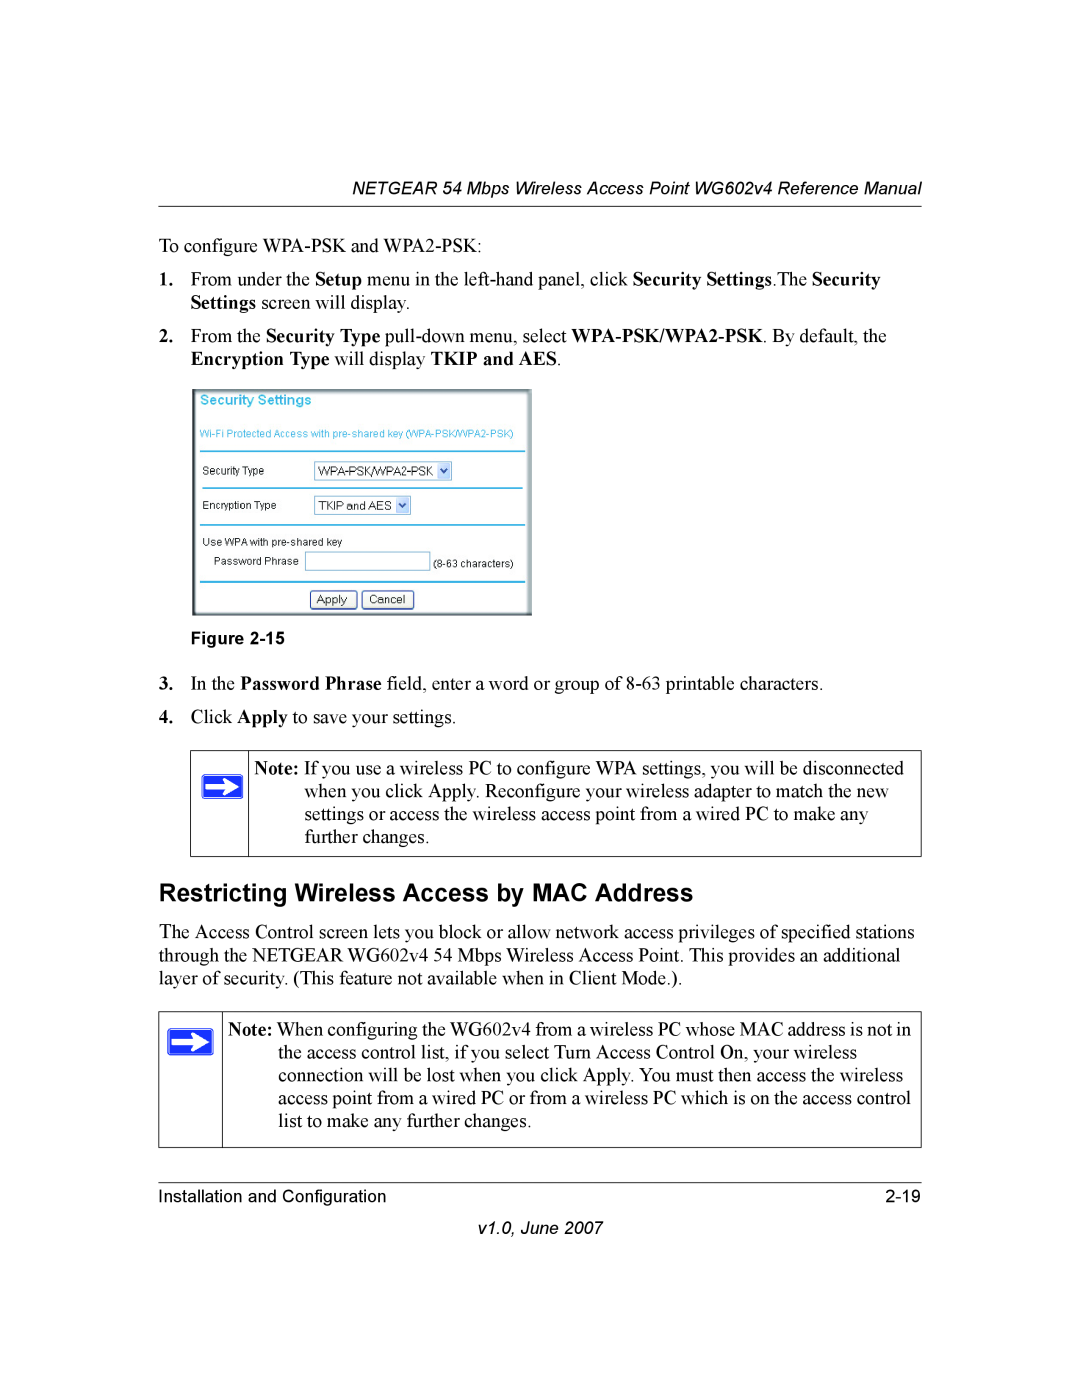 NETGEAR WG602V4 manual Restricting Wireless Access by MAC Address 